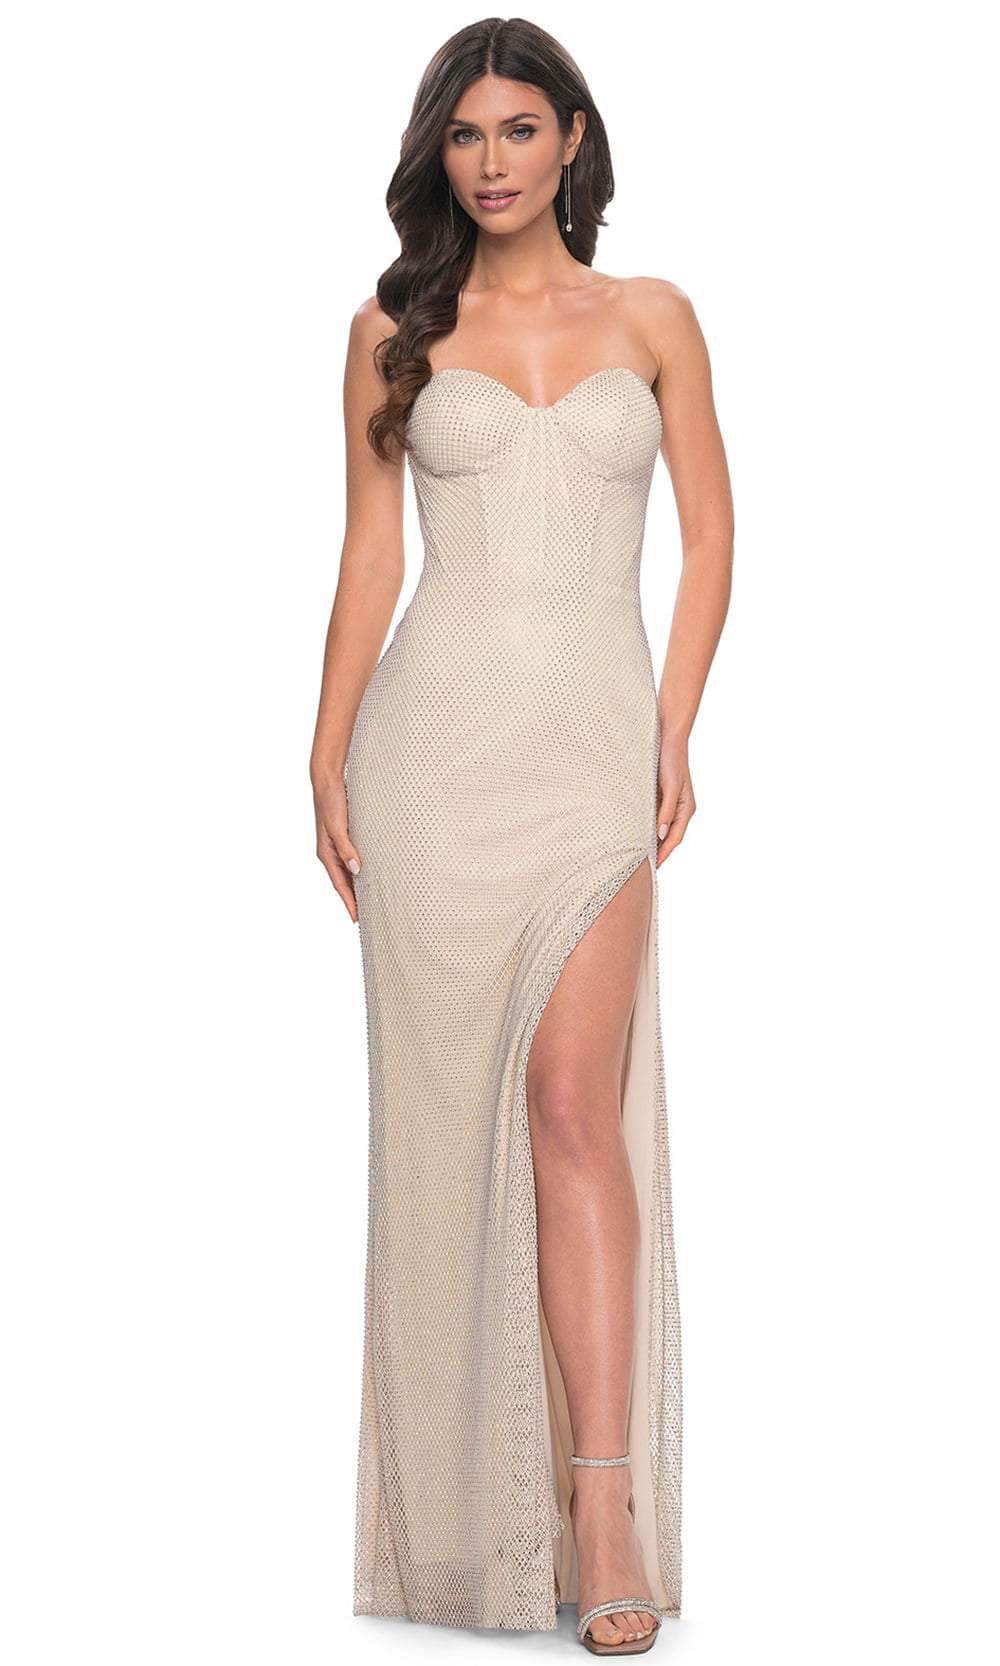 Image of La Femme 32414 - Hot Stone Fishnet Strapless Prom Dress